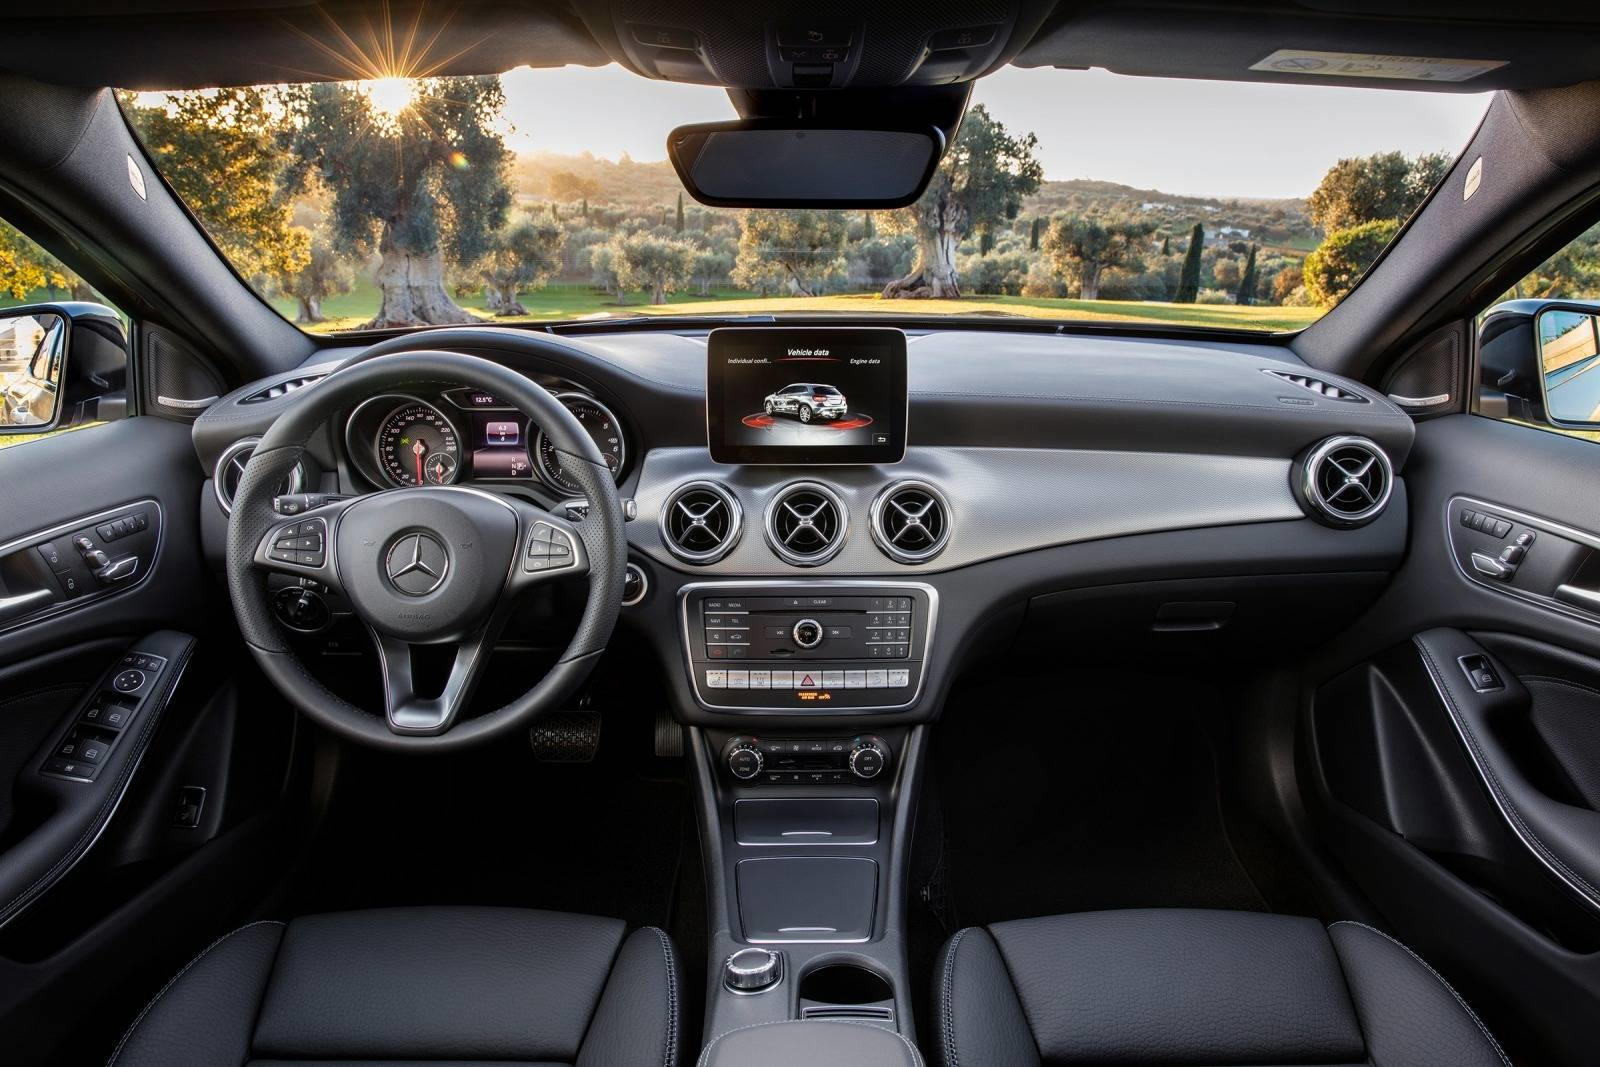 2020 Mercedes-Benz GLA-Class SUV Interior Dimensions: Seating, Cargo Space  & Trunk Size - Photos | CarBuzz